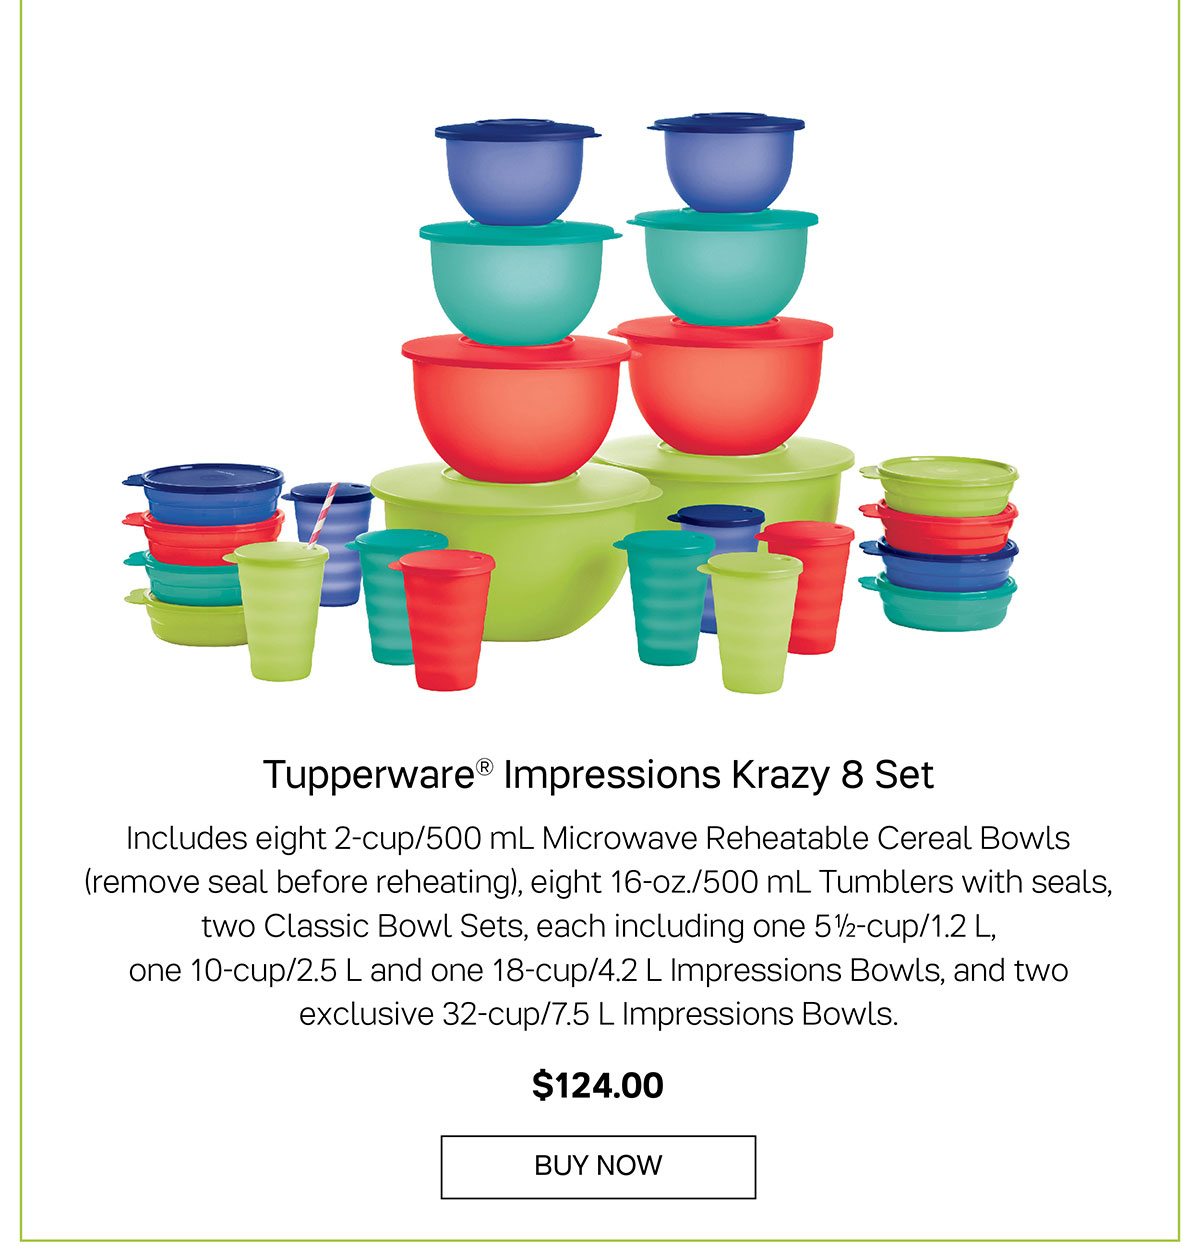 Tupperware Impressions Krazy 8 Set